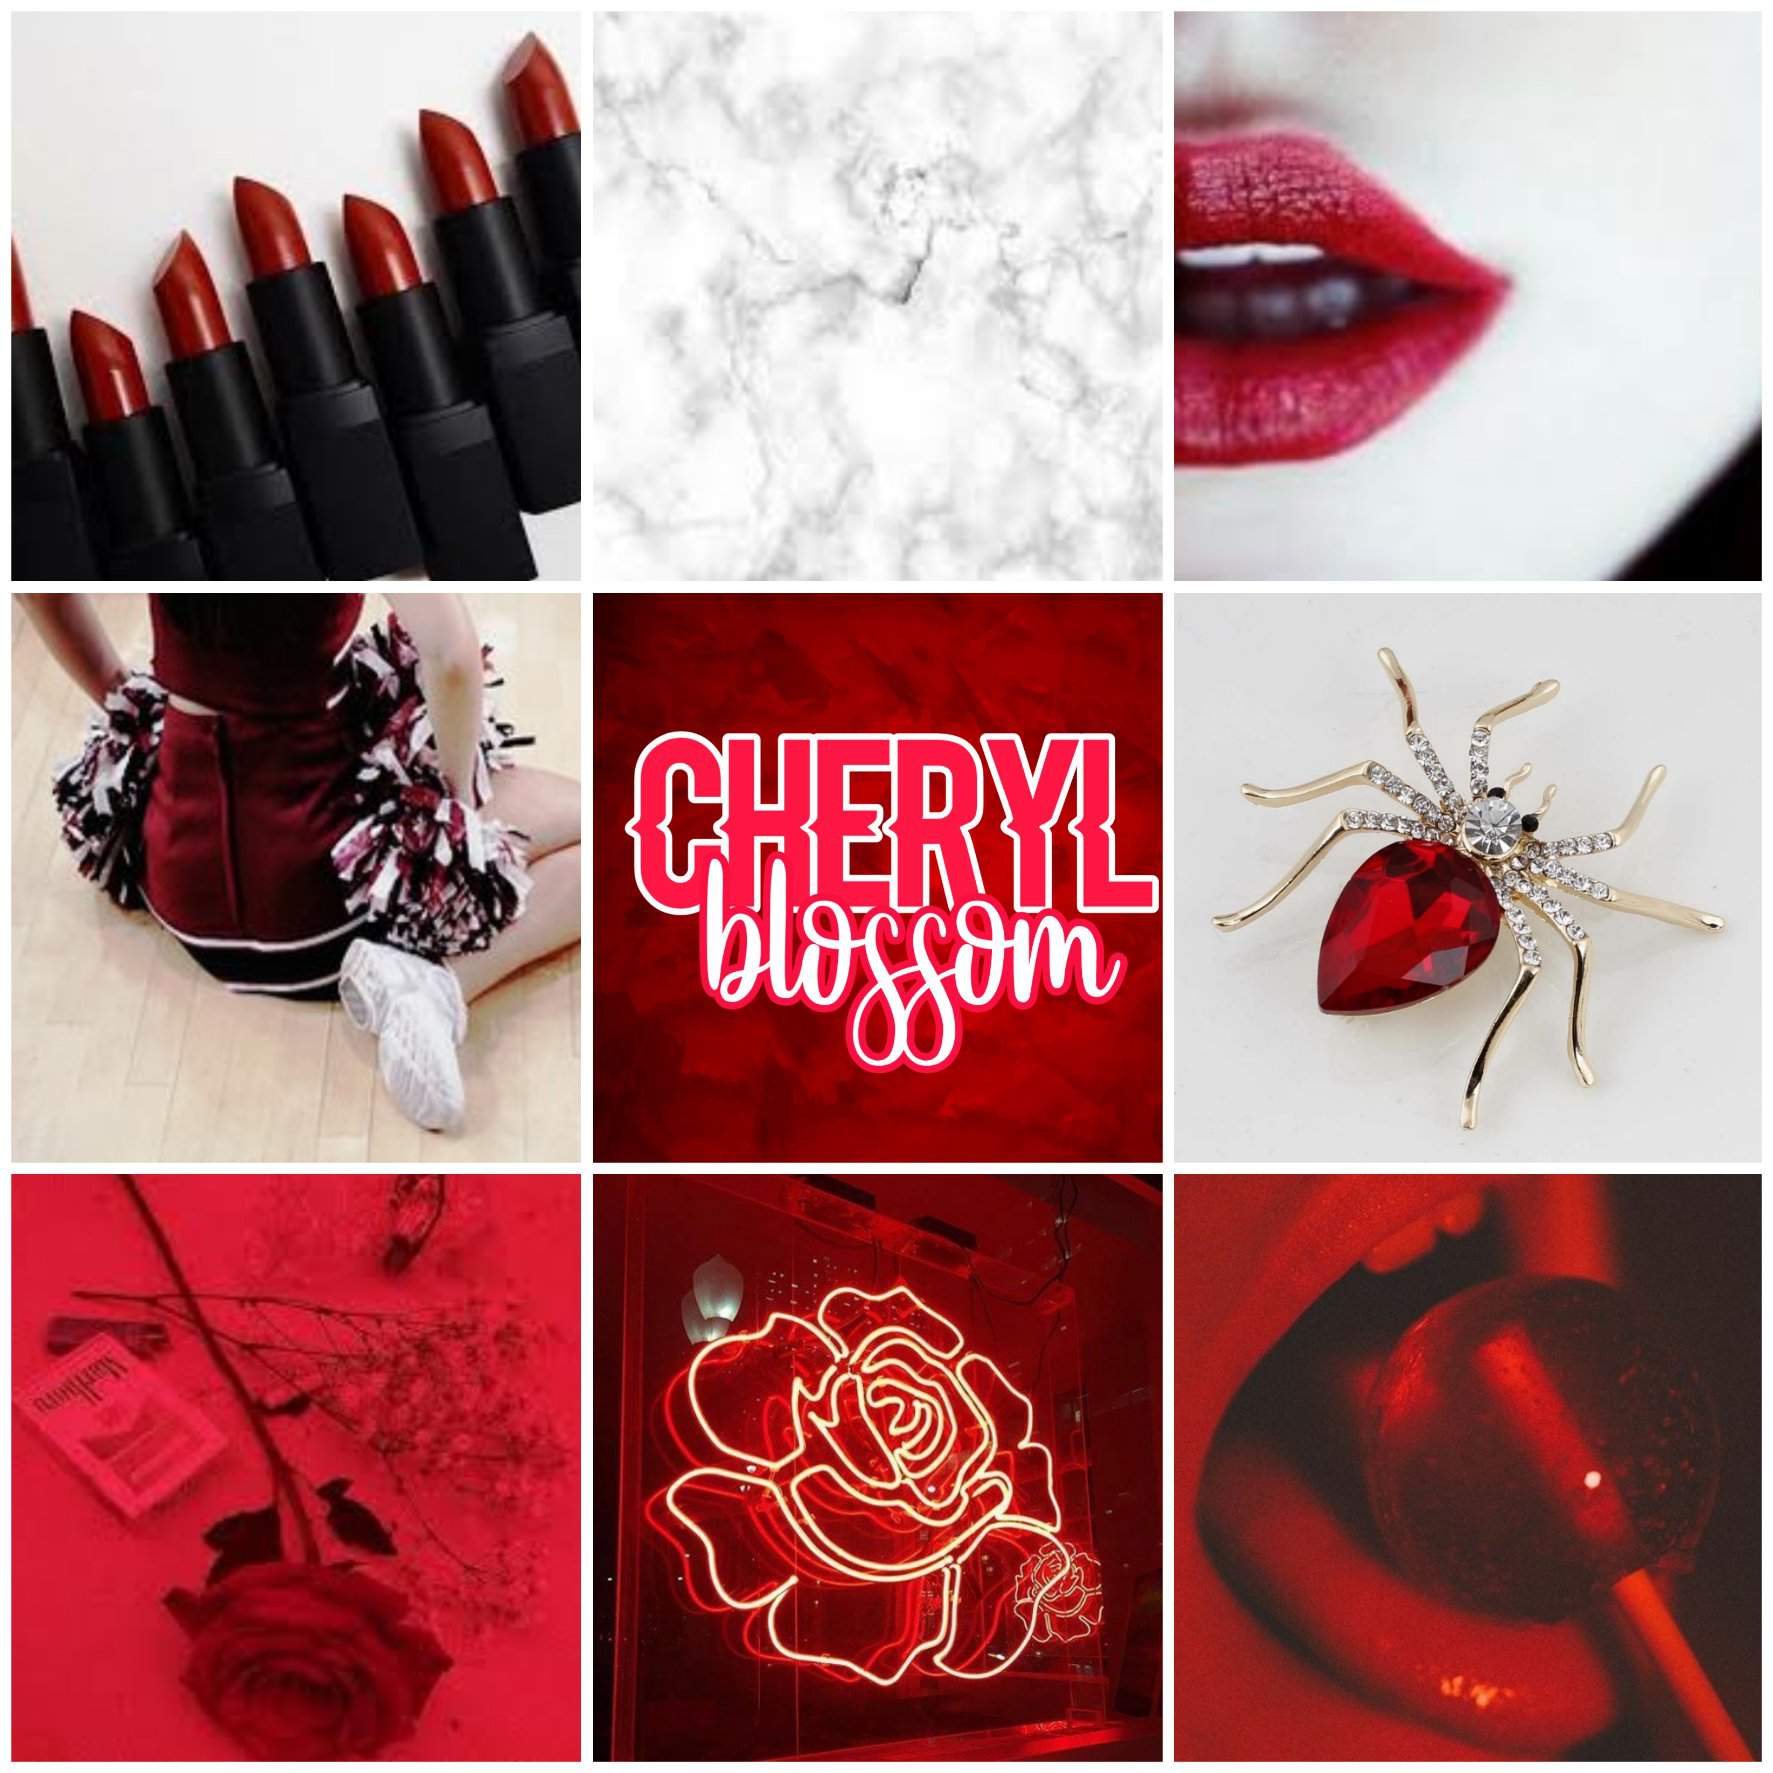 Cheryl Blossom Aesthetic | Riverdale Amino